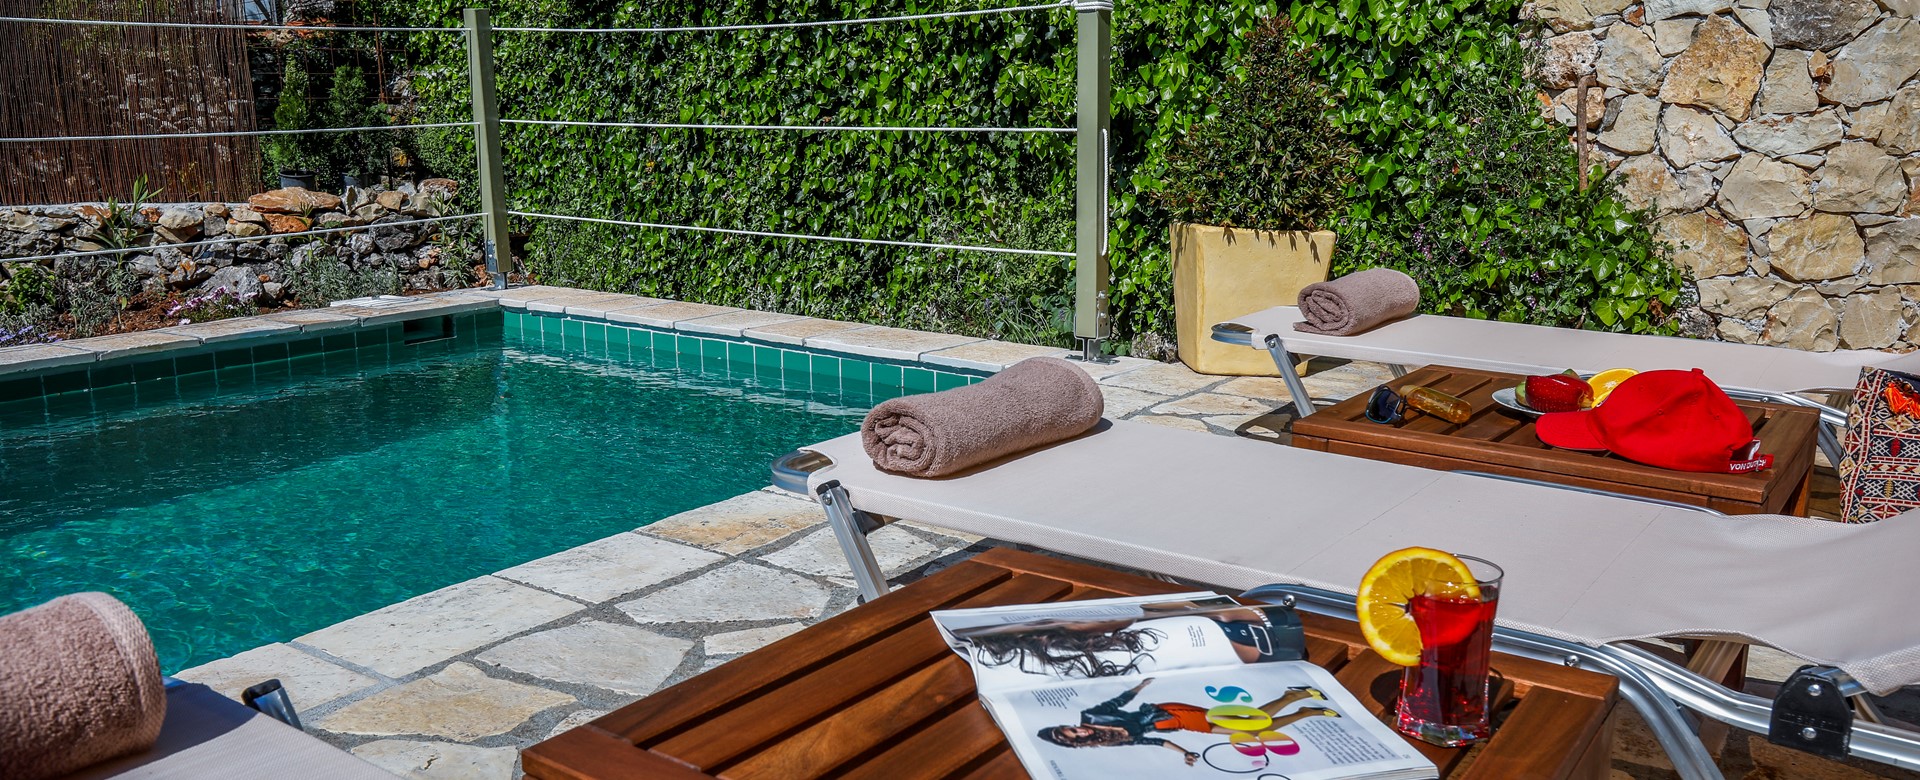 Enjoy poolside drinks on comfy sun loungers at Rosie's Herb Cottage, Assos, Kefalonia, Greek Islands